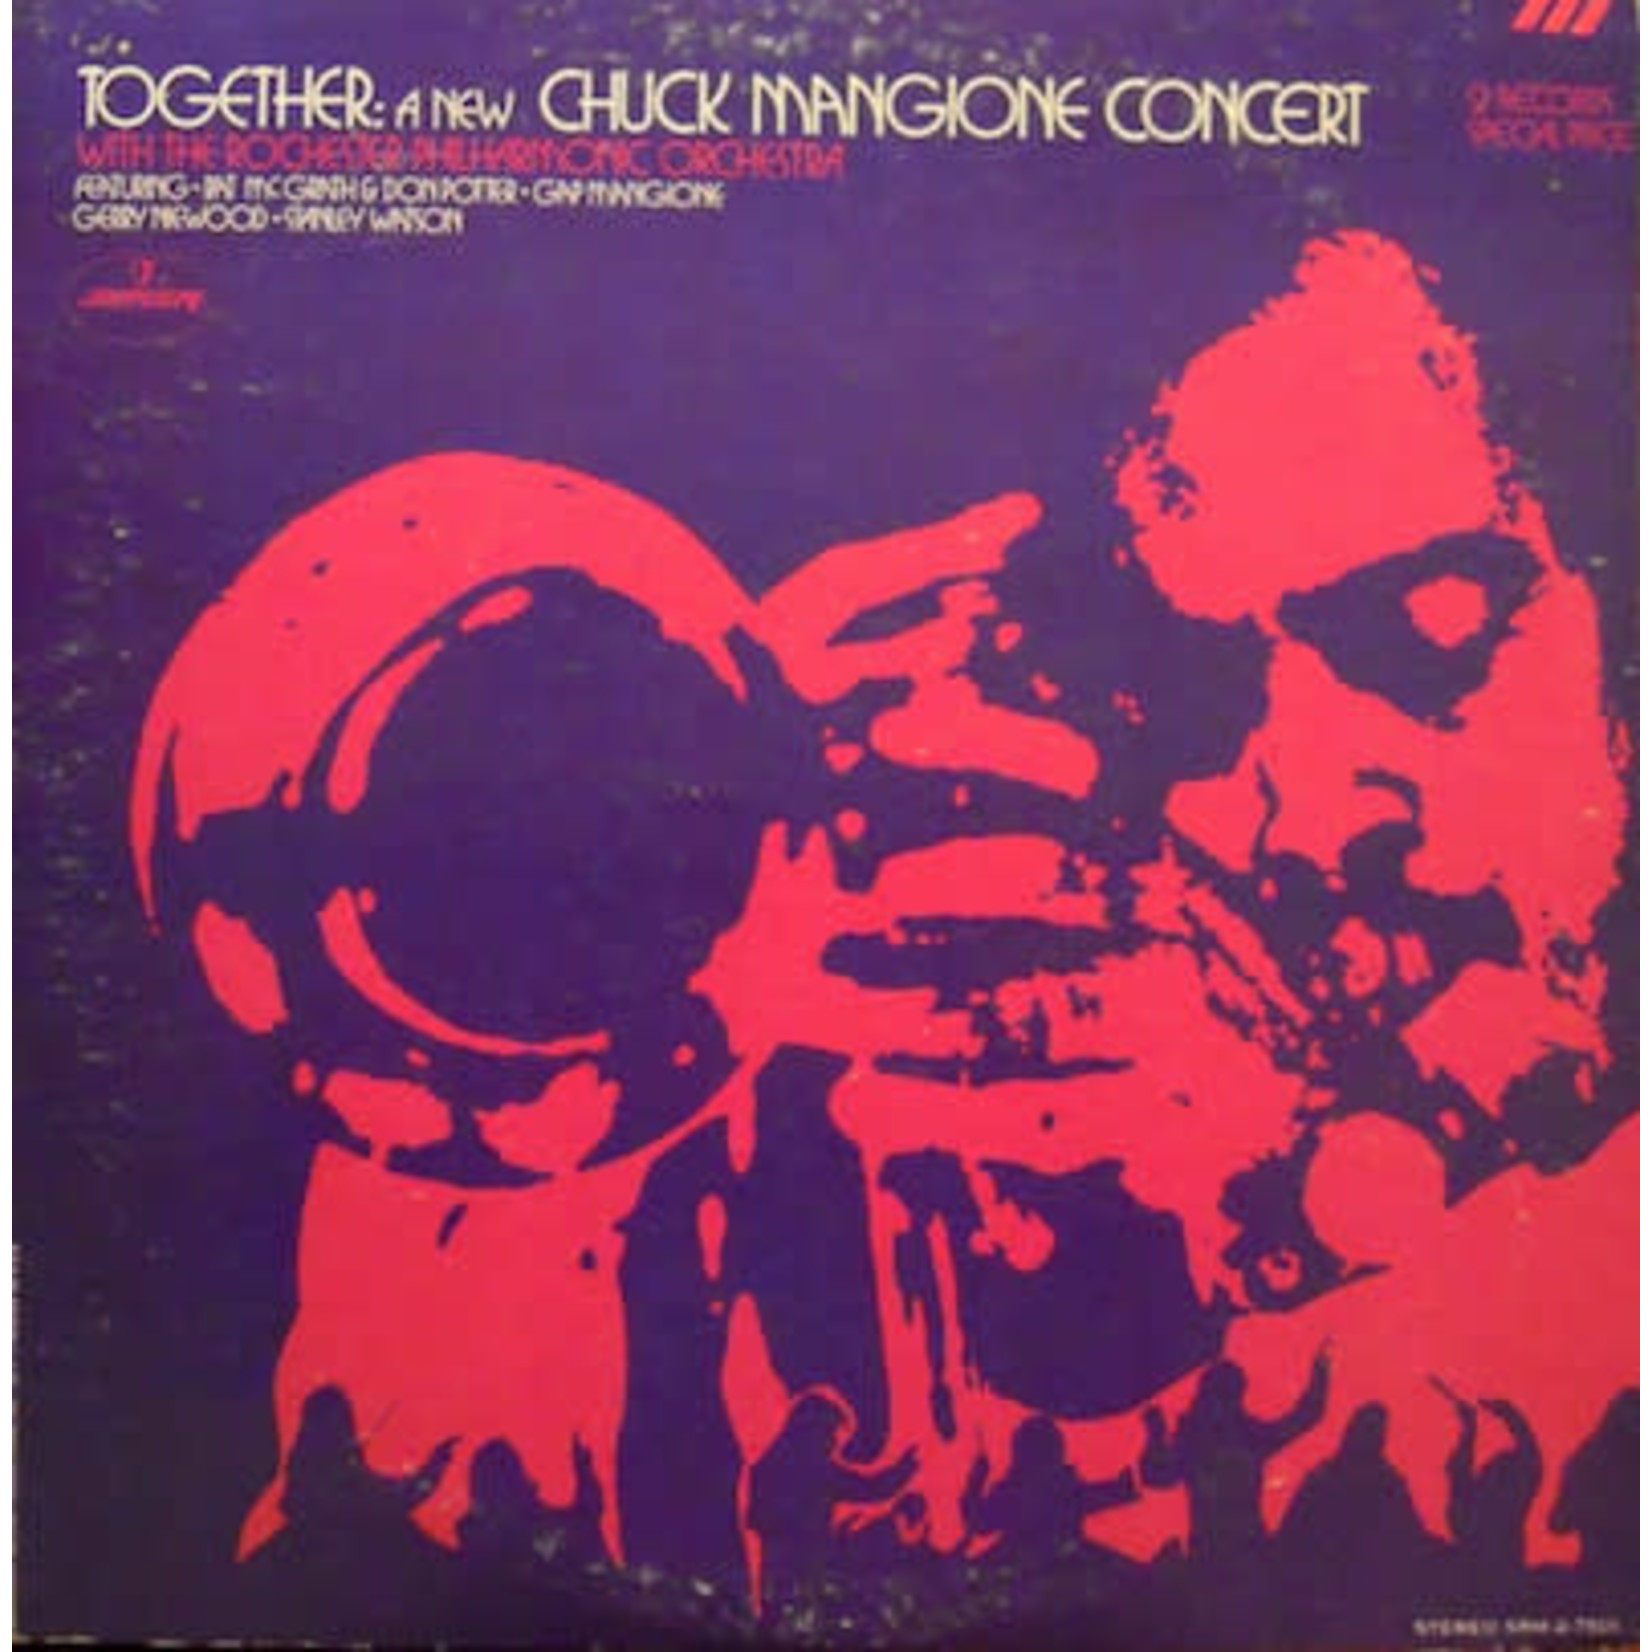 [Vintage] Chuck Mangione - Together: A New Concert